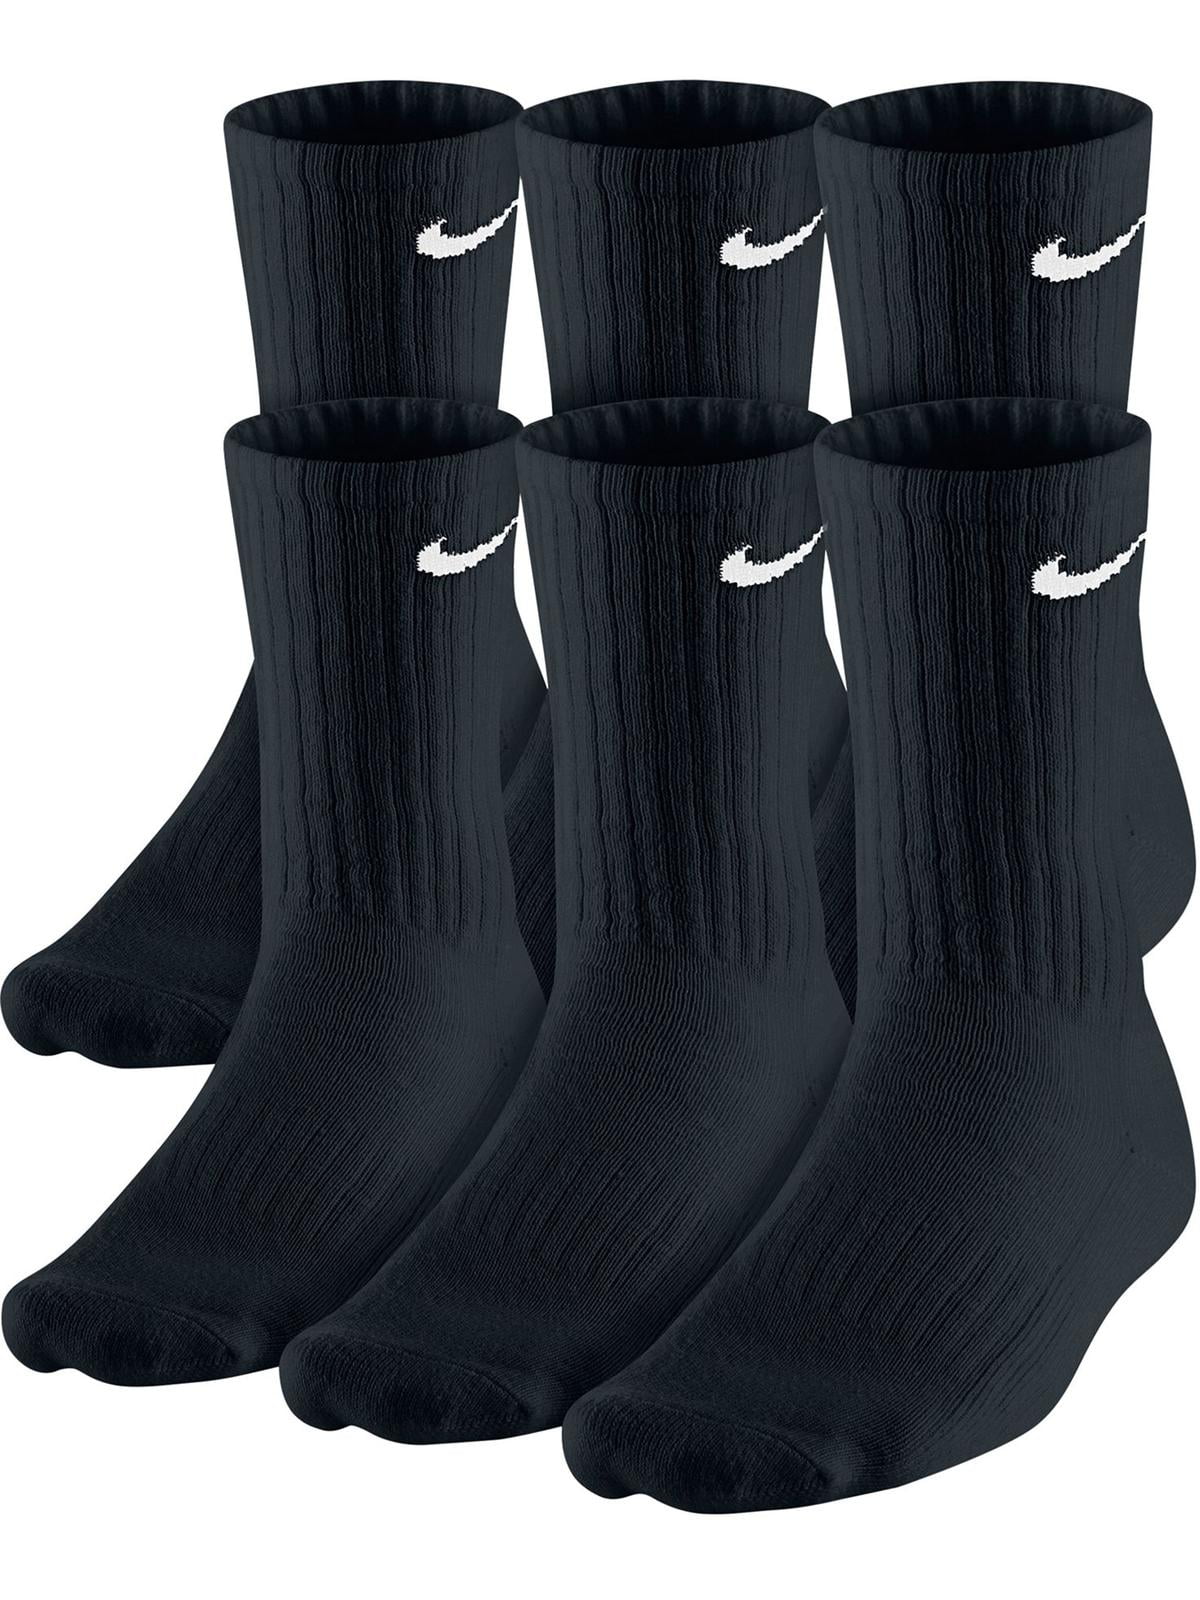 Nike Everyday Cushioned Training Crew Socks (6 Pairs) Walmart.com